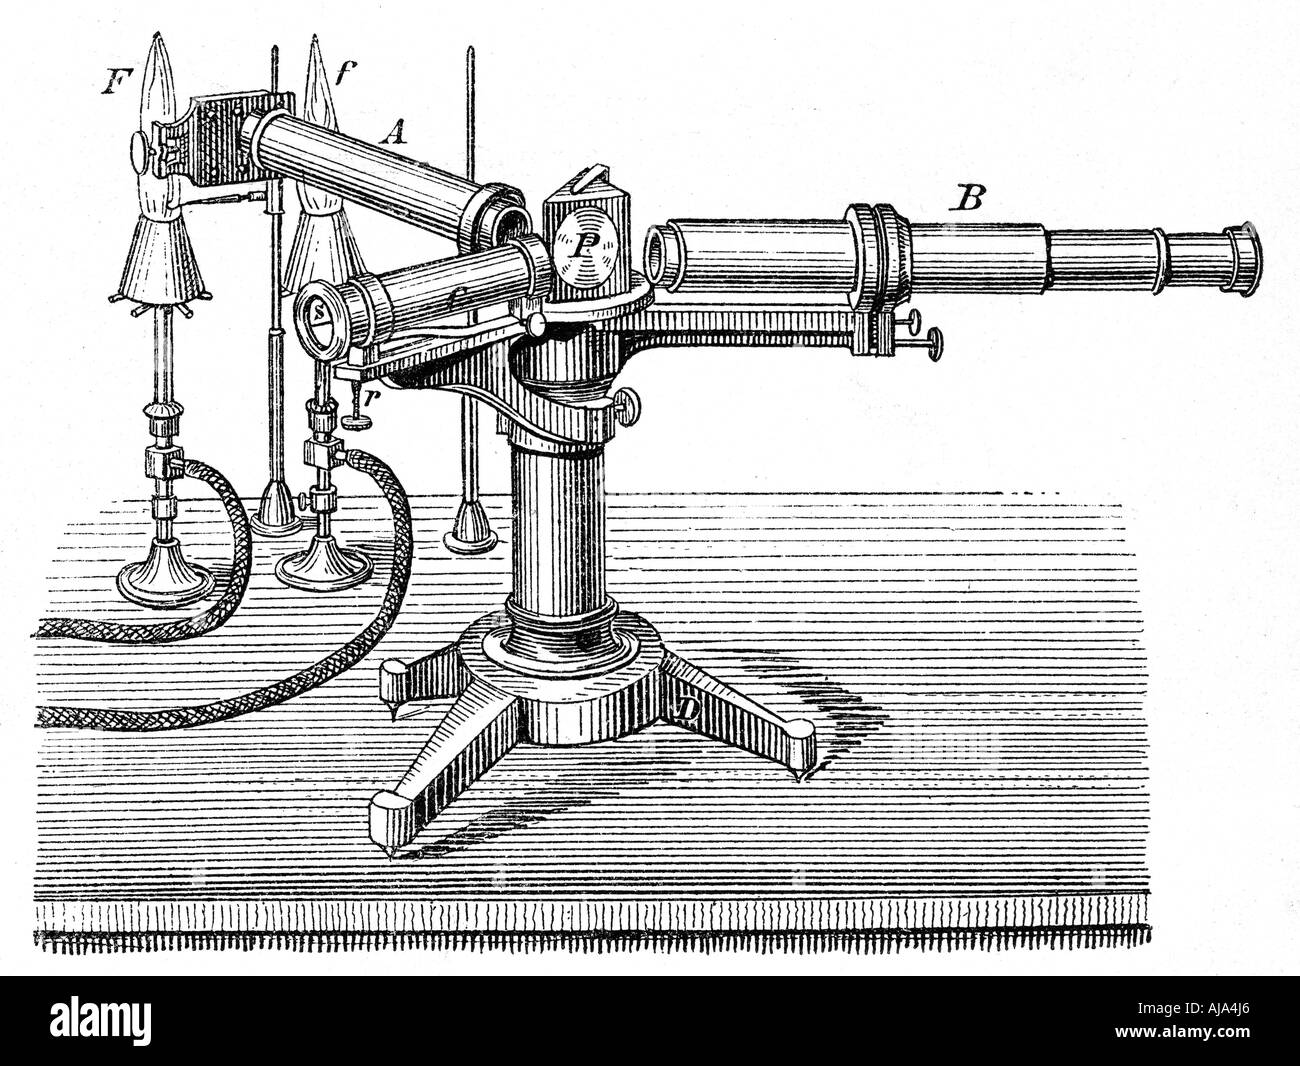 Spectroscopic apparatus used by Robert Wilhelm Bunsen and Gustav Robert Kirchhoff, c1895. Artist: Unknown Stock Photo